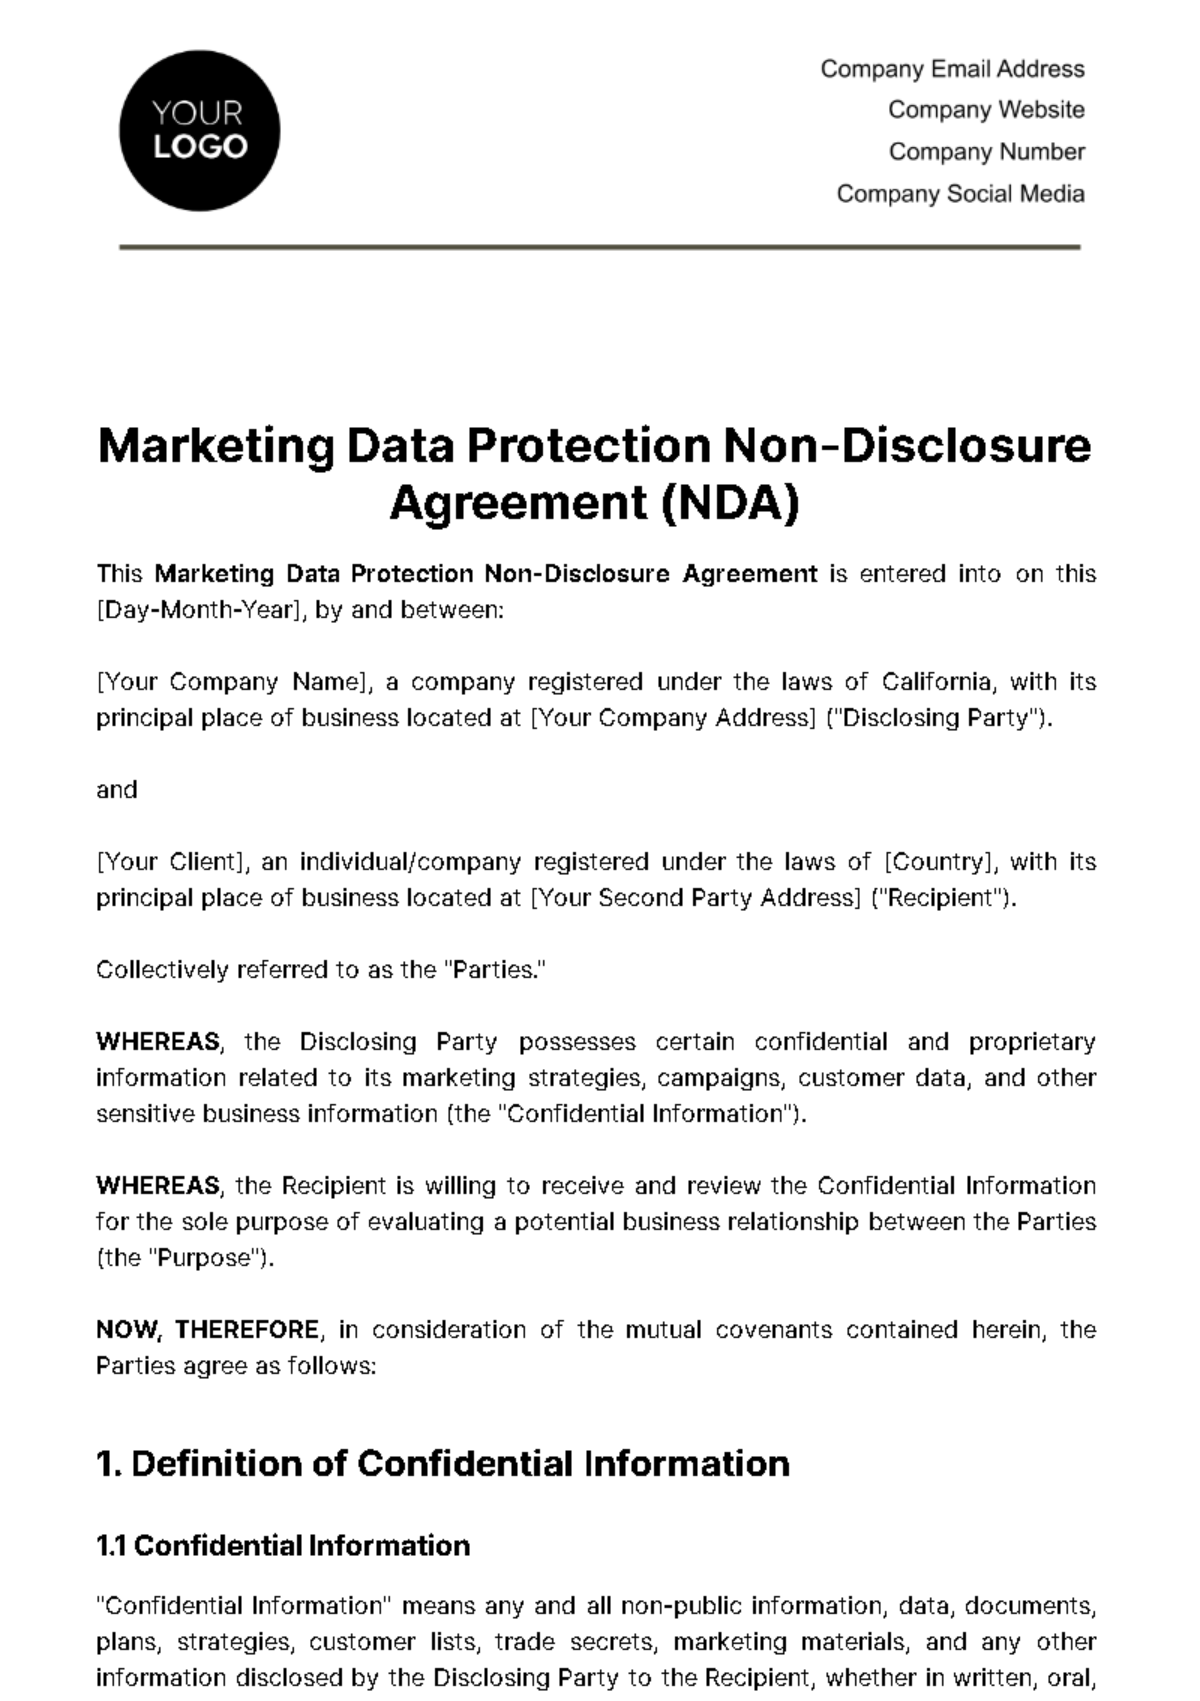 Marketing Data Protection NDA Template